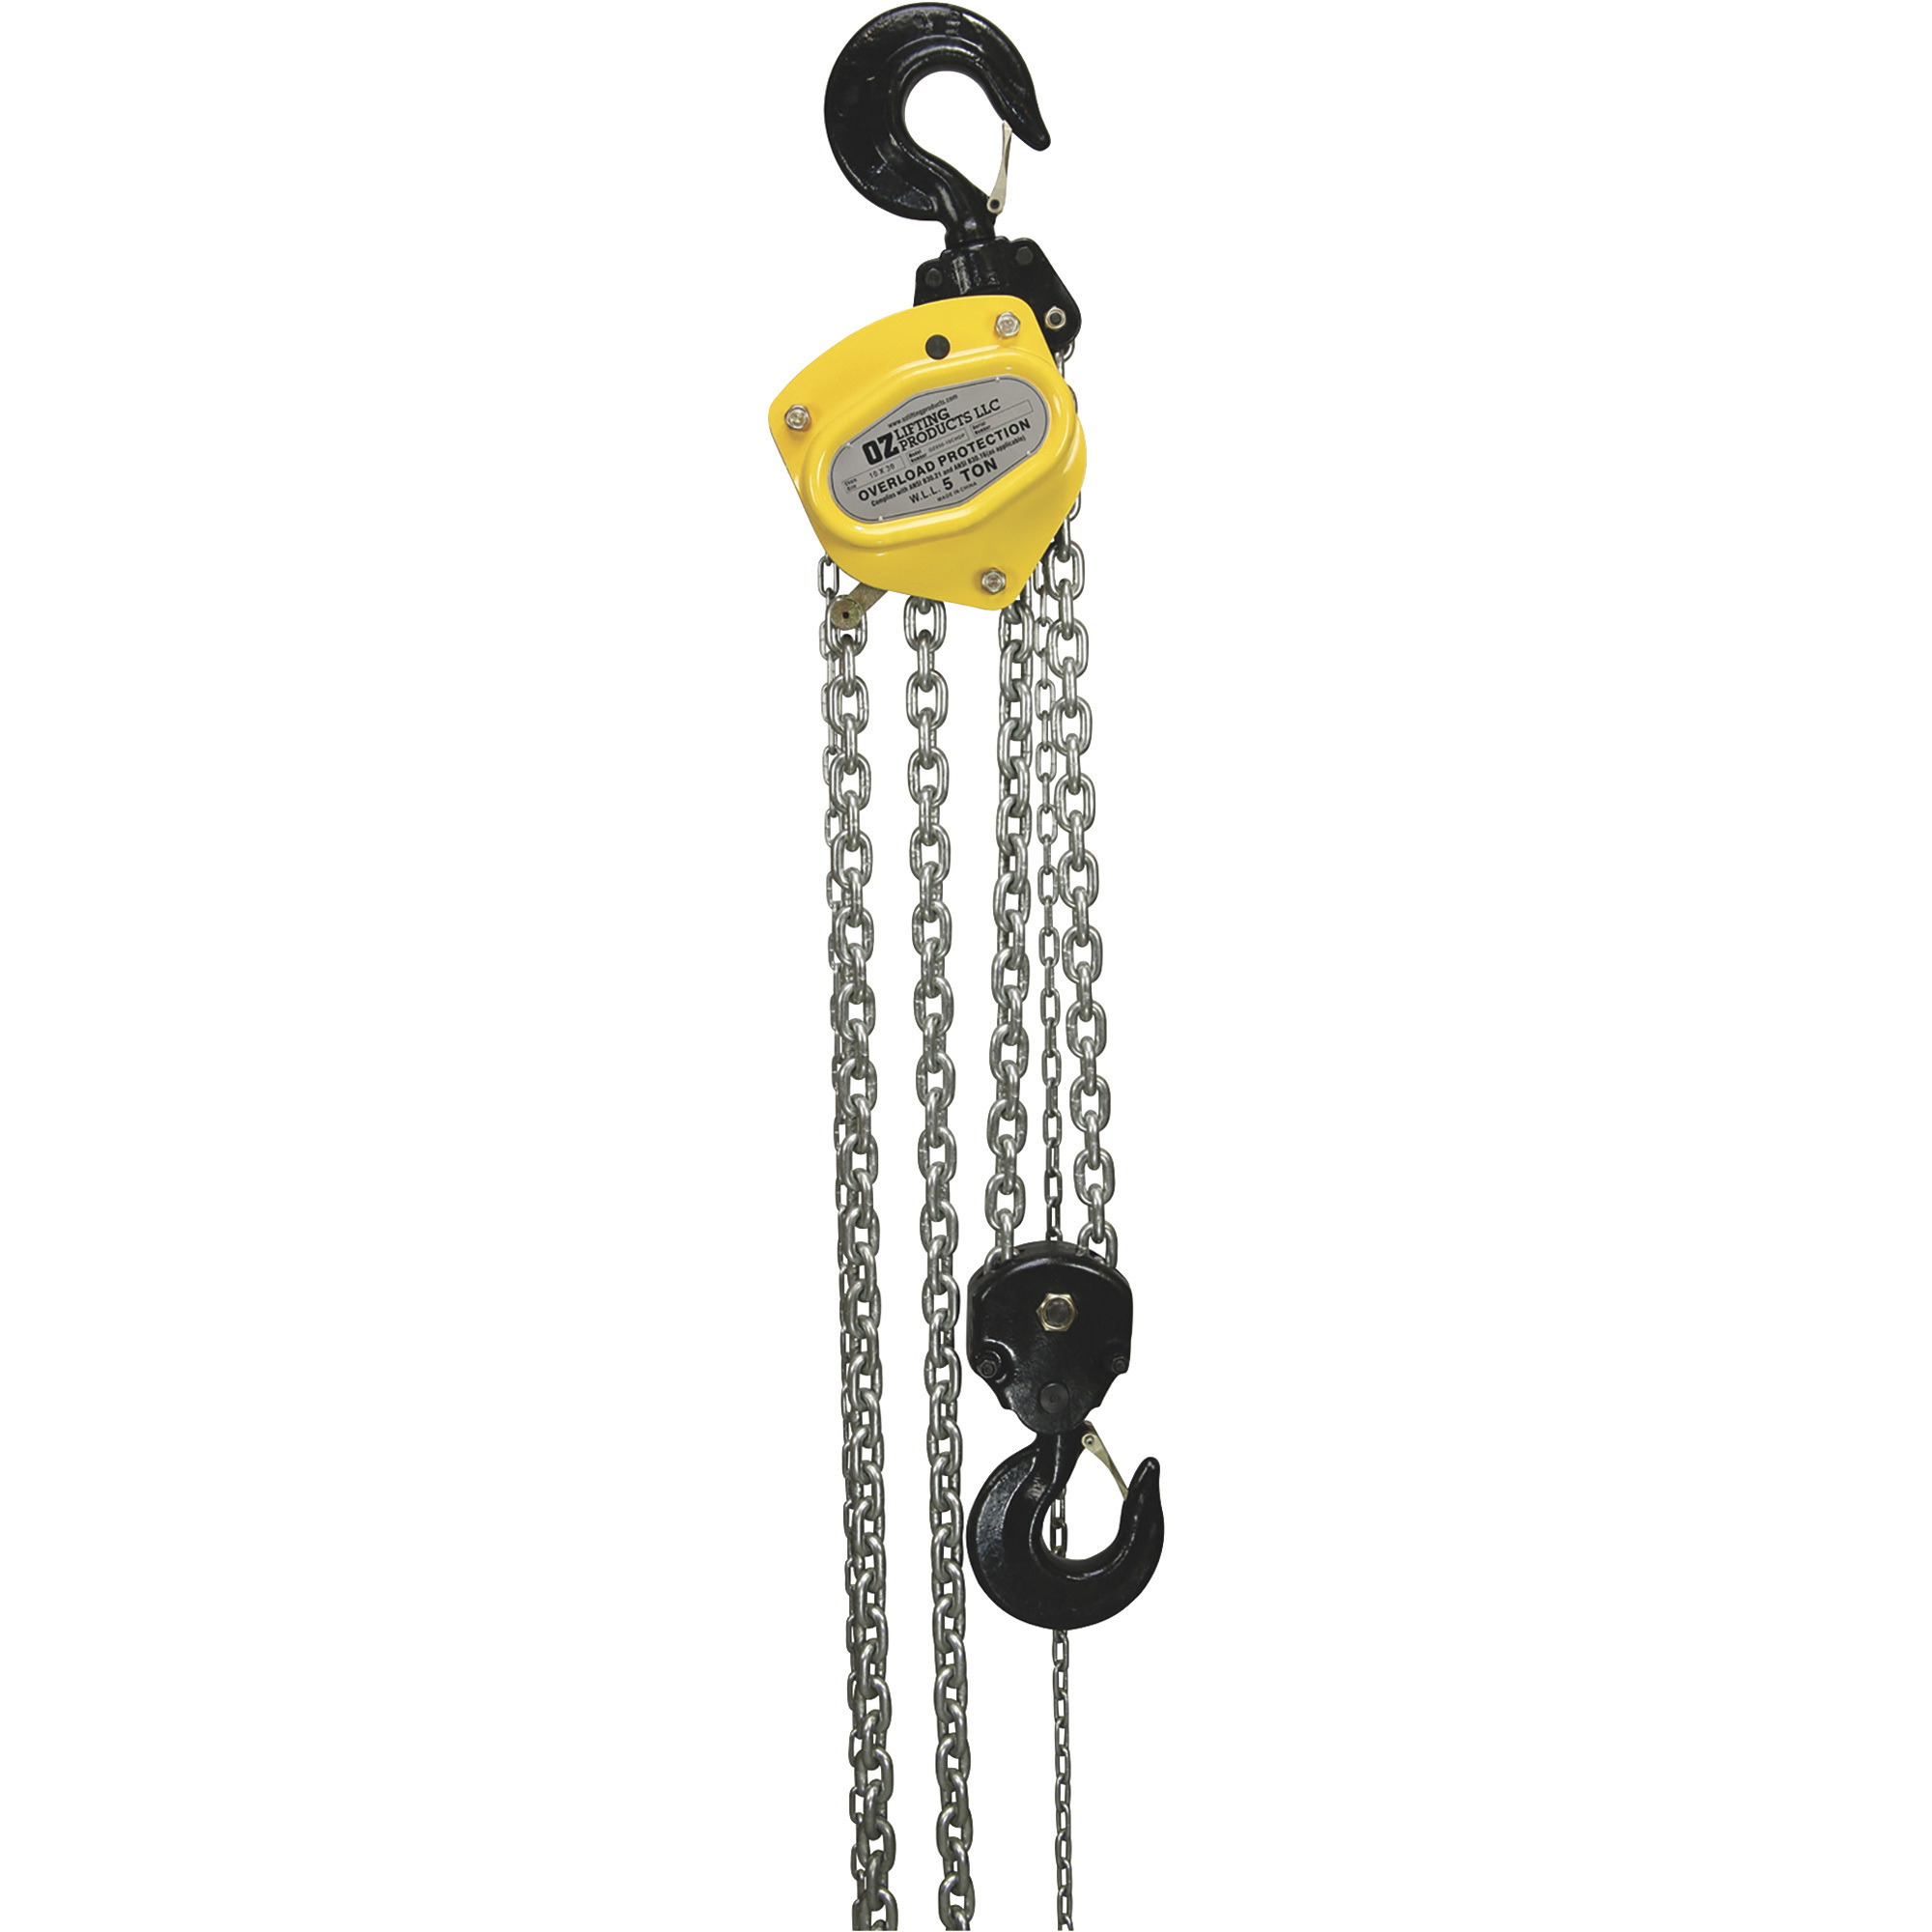 OZ Lifting Products Premium Manual Chain Hoist â 5-Ton Capacity, 30ft. Lift, Model OZ050-30CHOP